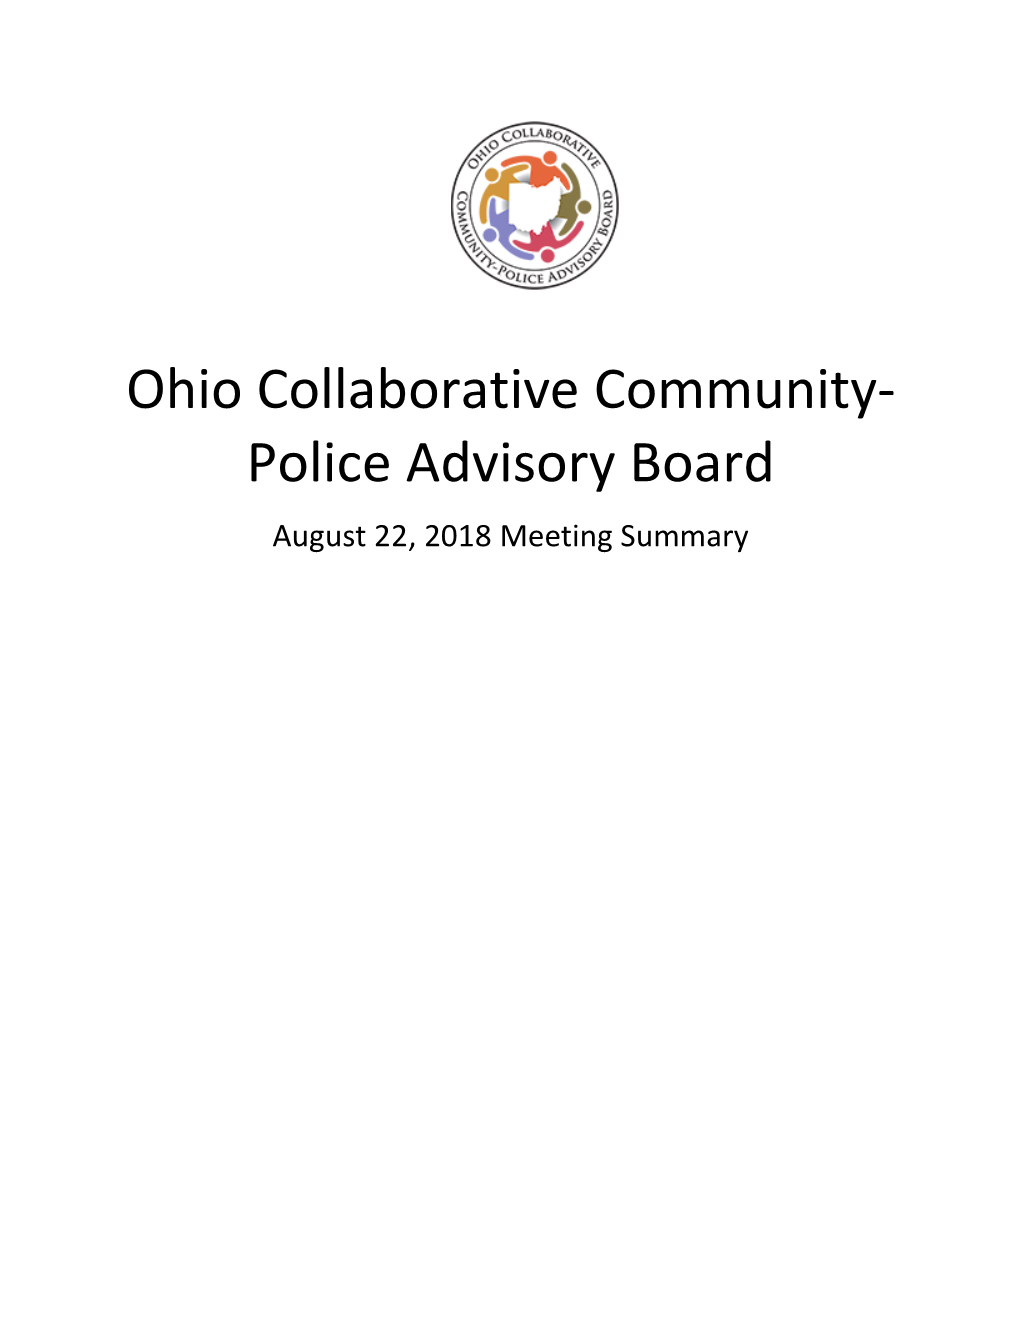 Ohio Collaborative Community- Police Advisory Board August 22, 2018 Meeting Summary